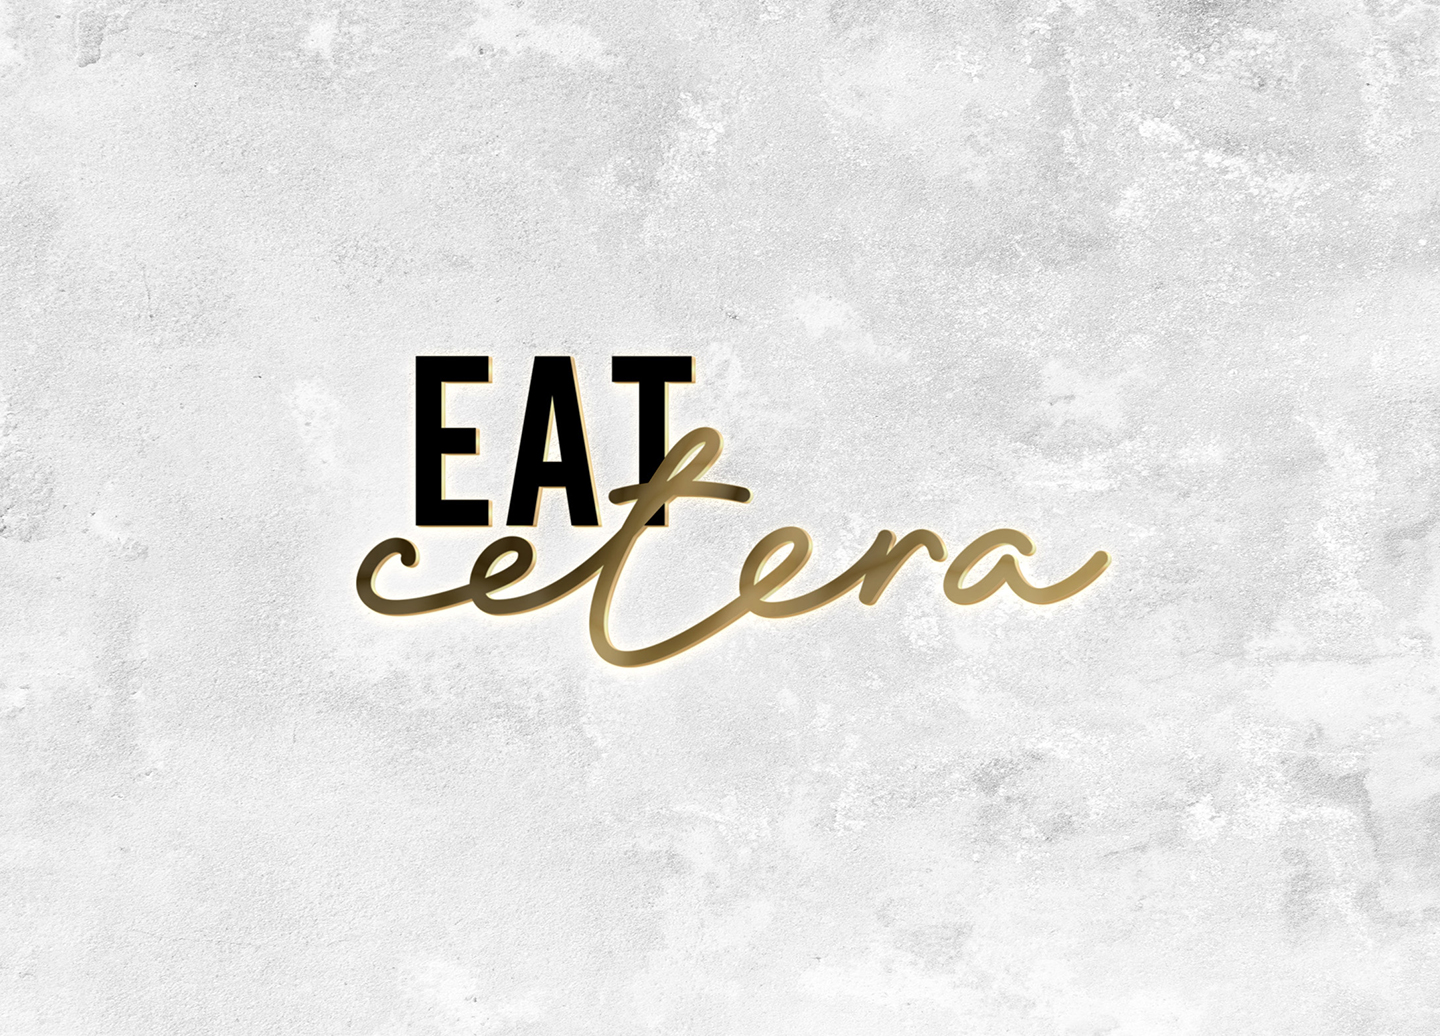 Eat Cetera-picture-28440